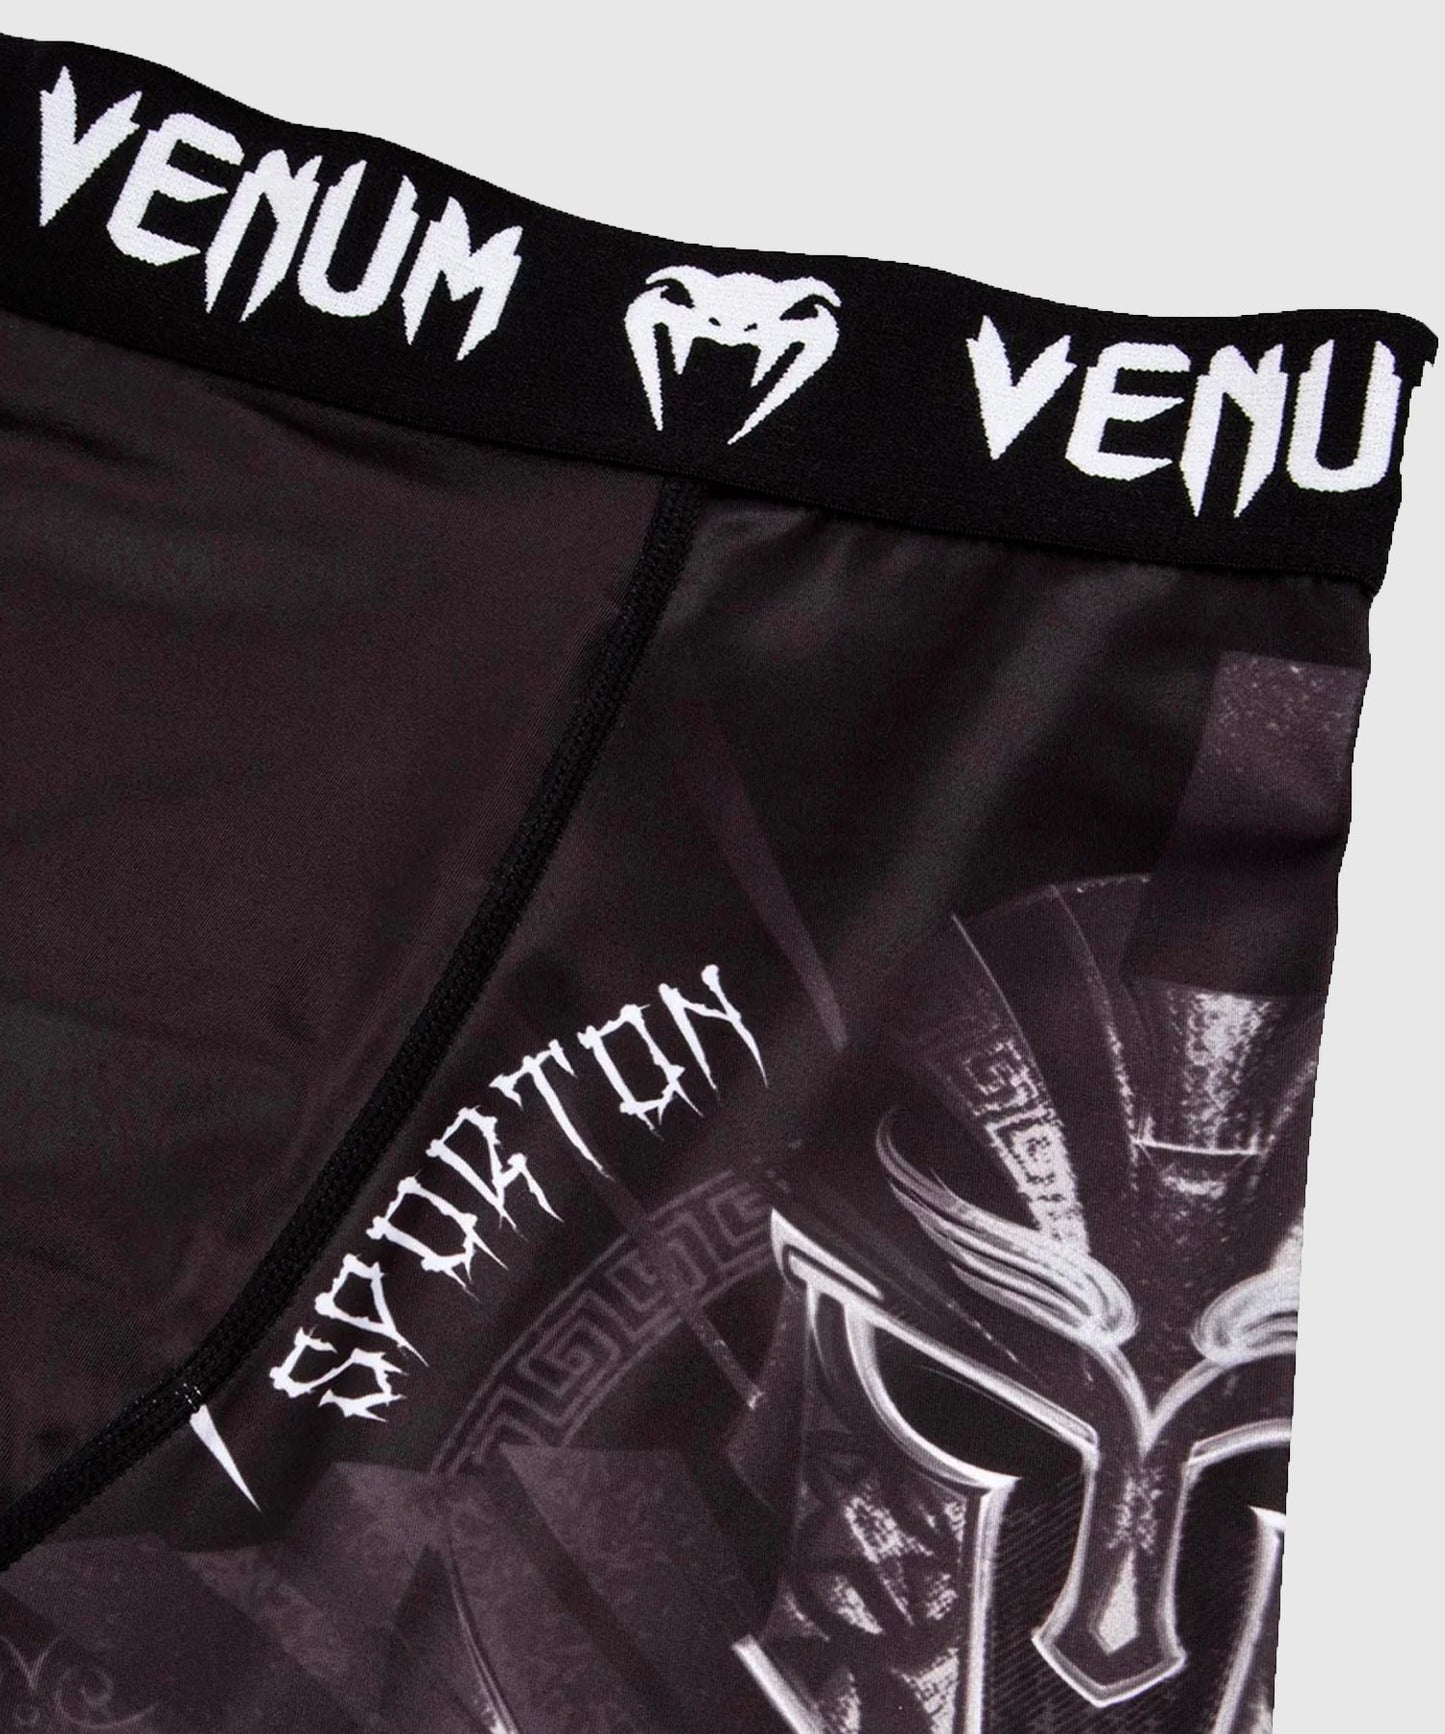 Vale Tudo Shorts Venum Gladiator 3.0 - zwart/wit